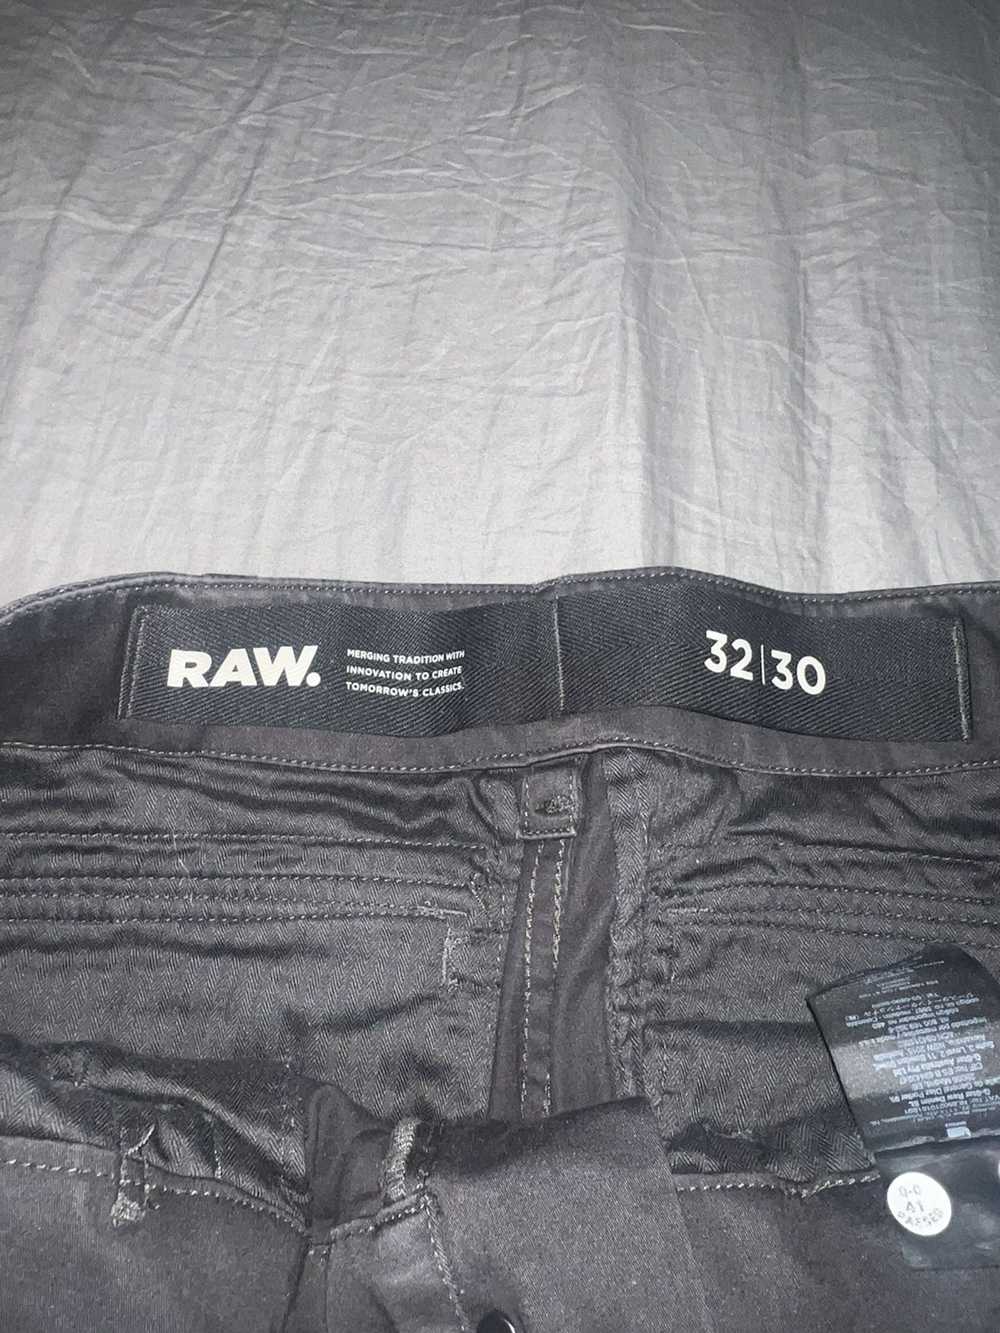 Gstar G-Star Raw Cargo Pants 32/30 - image 2